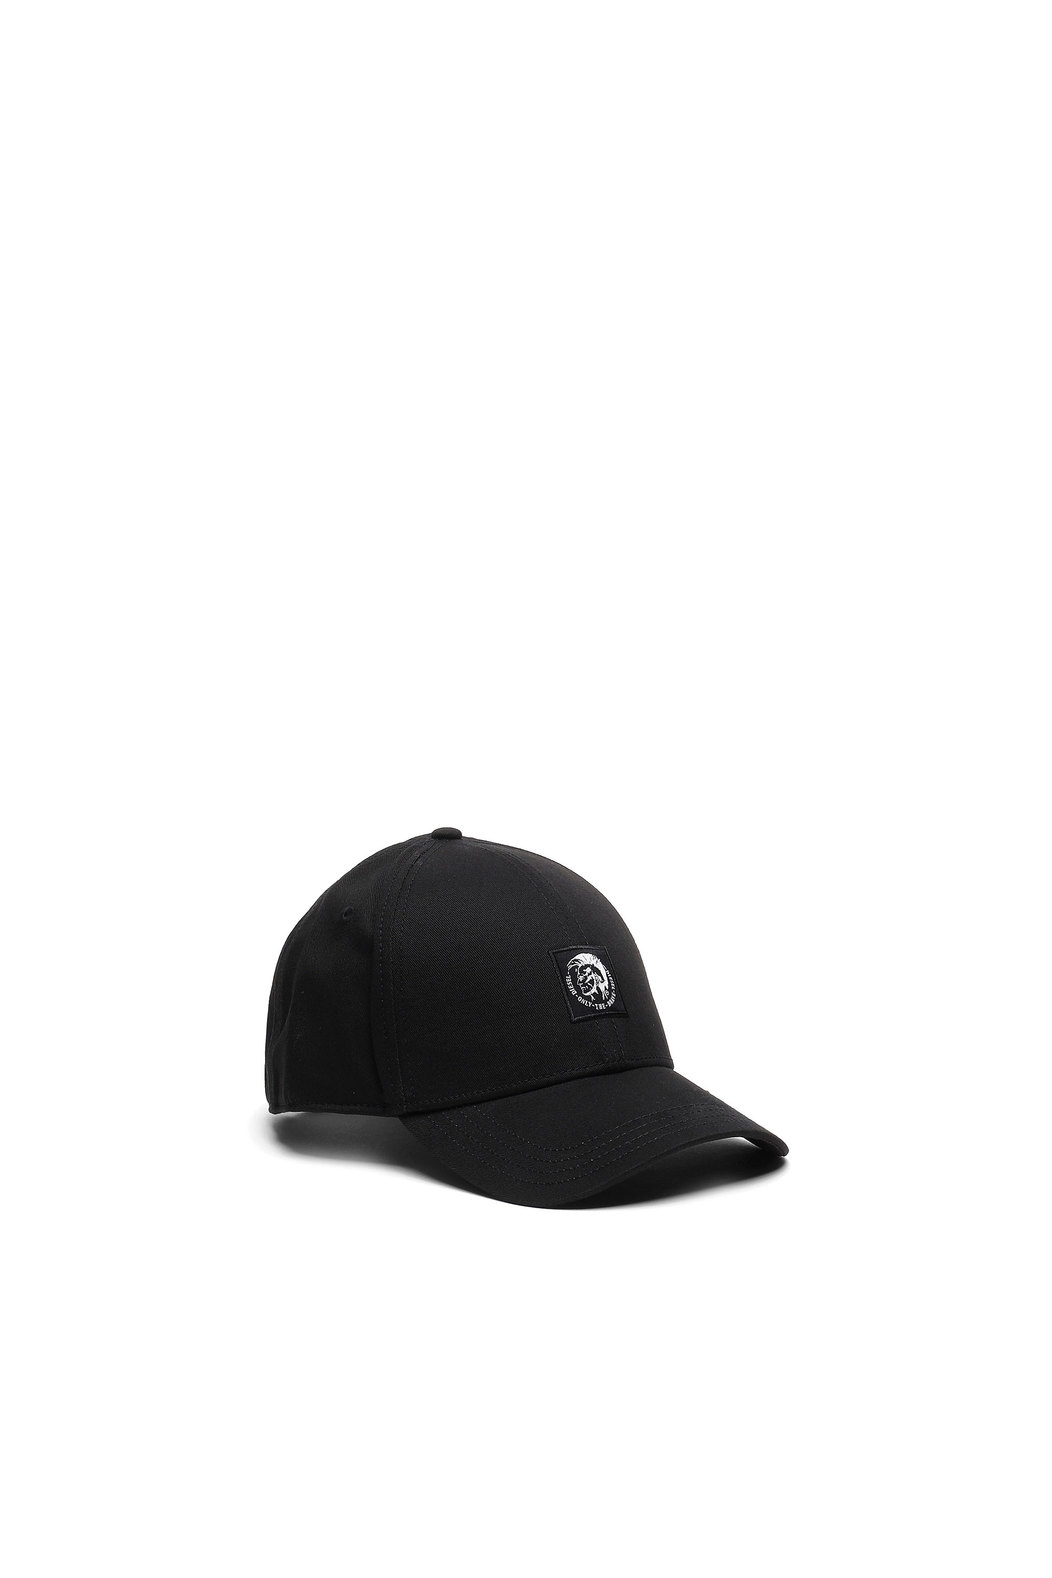 Baseball cap with Mohawk logo